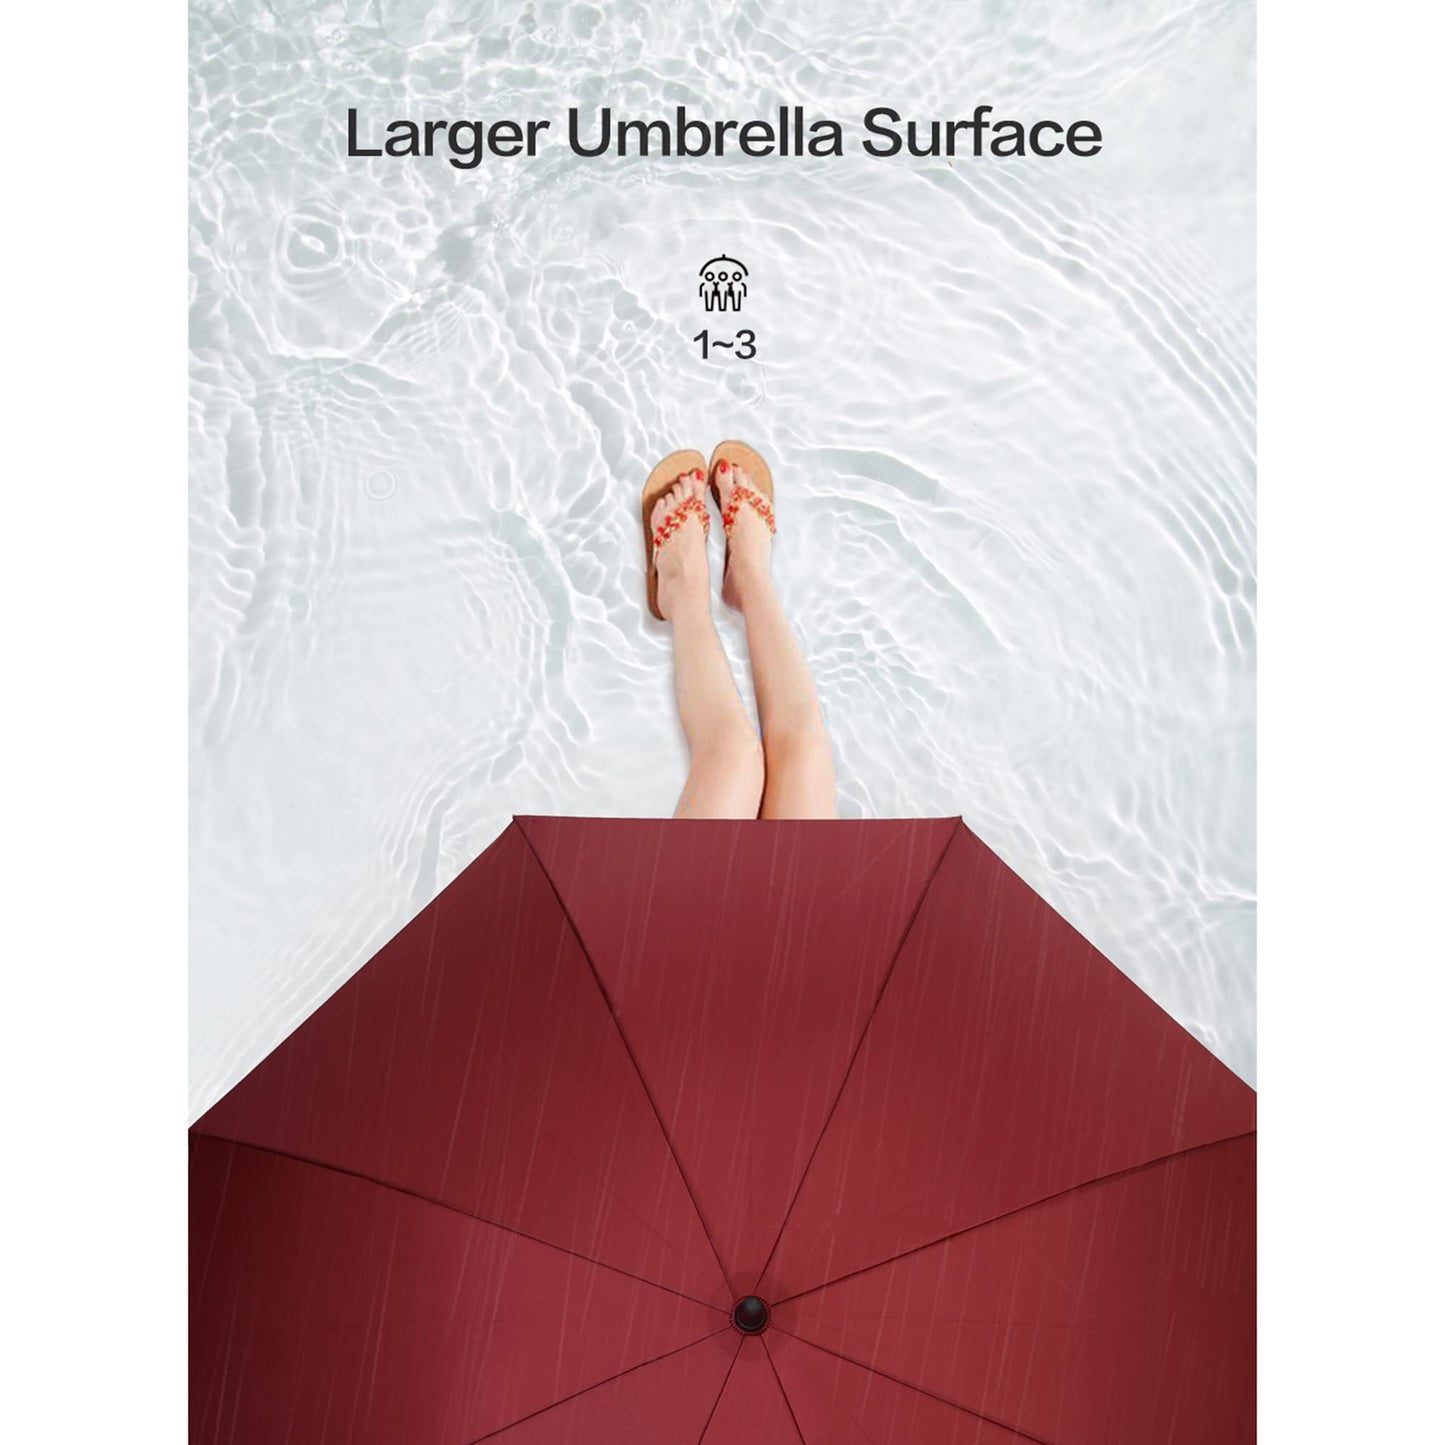 THE CLOWNFISH Umbrella Celebrity Series Single Fold Auto Open J- shape Handle Waterproof Pongee Umbrellas For Men and Women (Maroon)